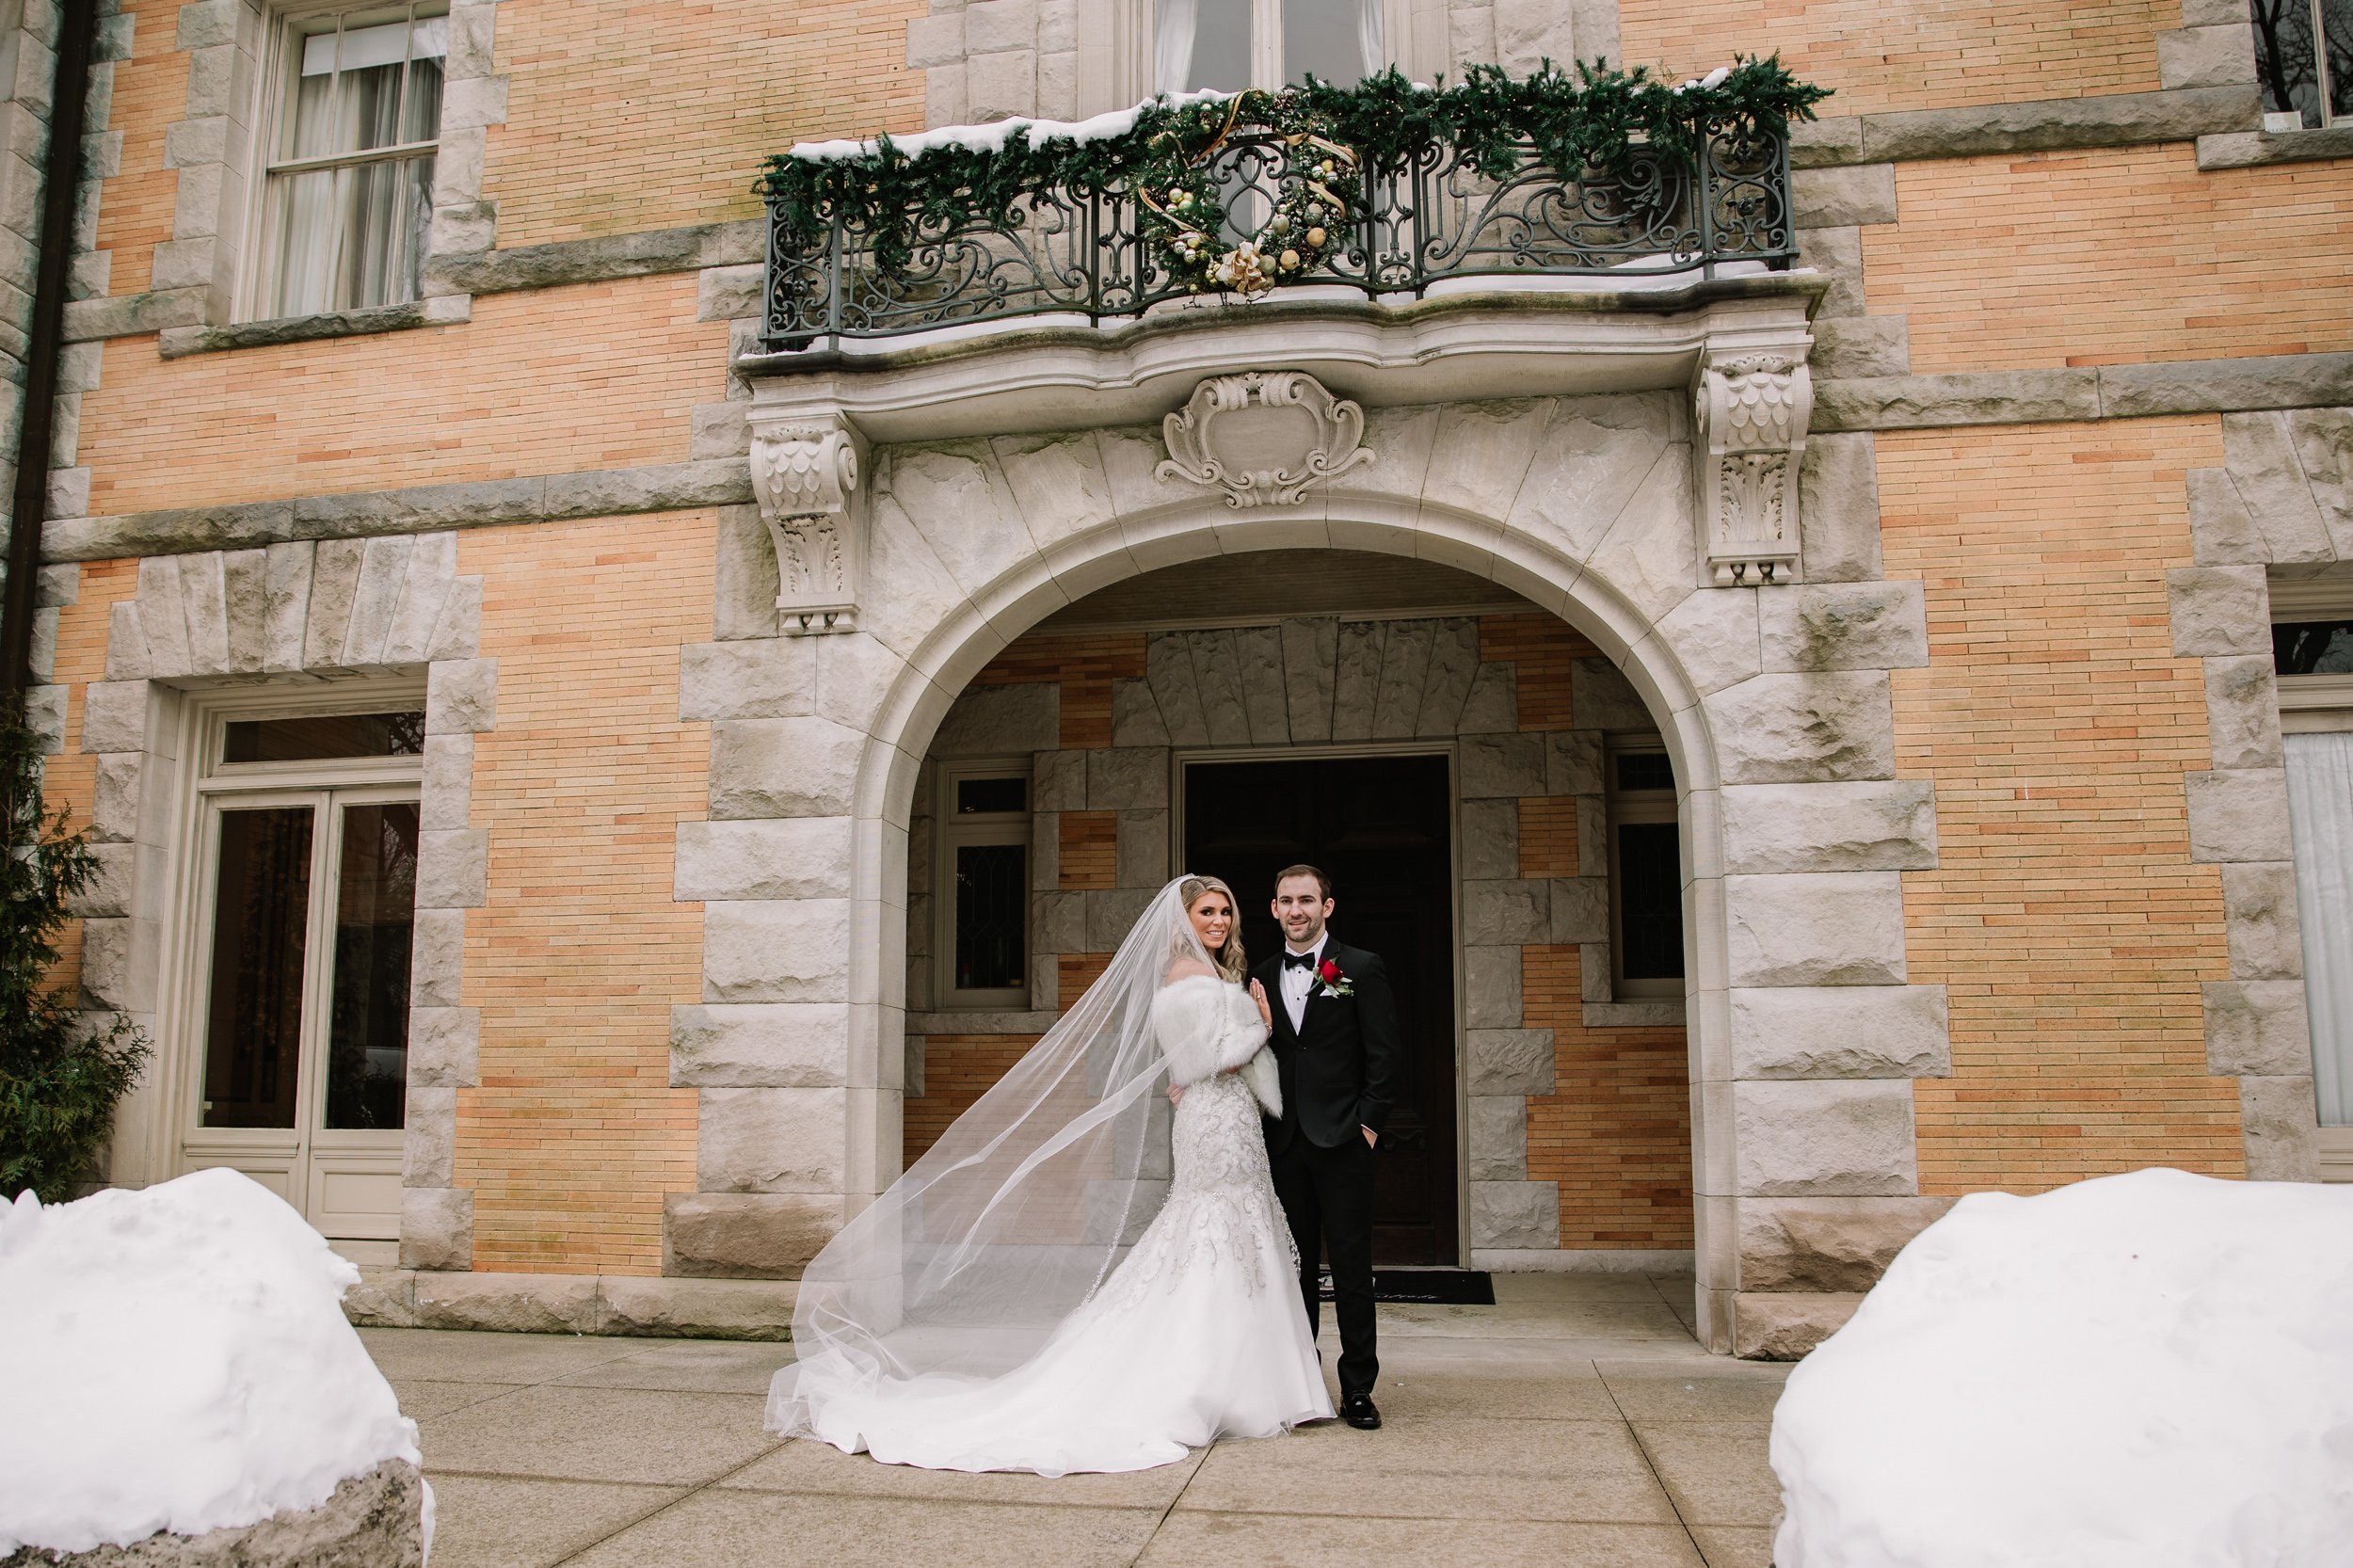 LUCEINS MANOR WEDDING PHOTOGRAPHY - FEB 2021 - 28.jpg